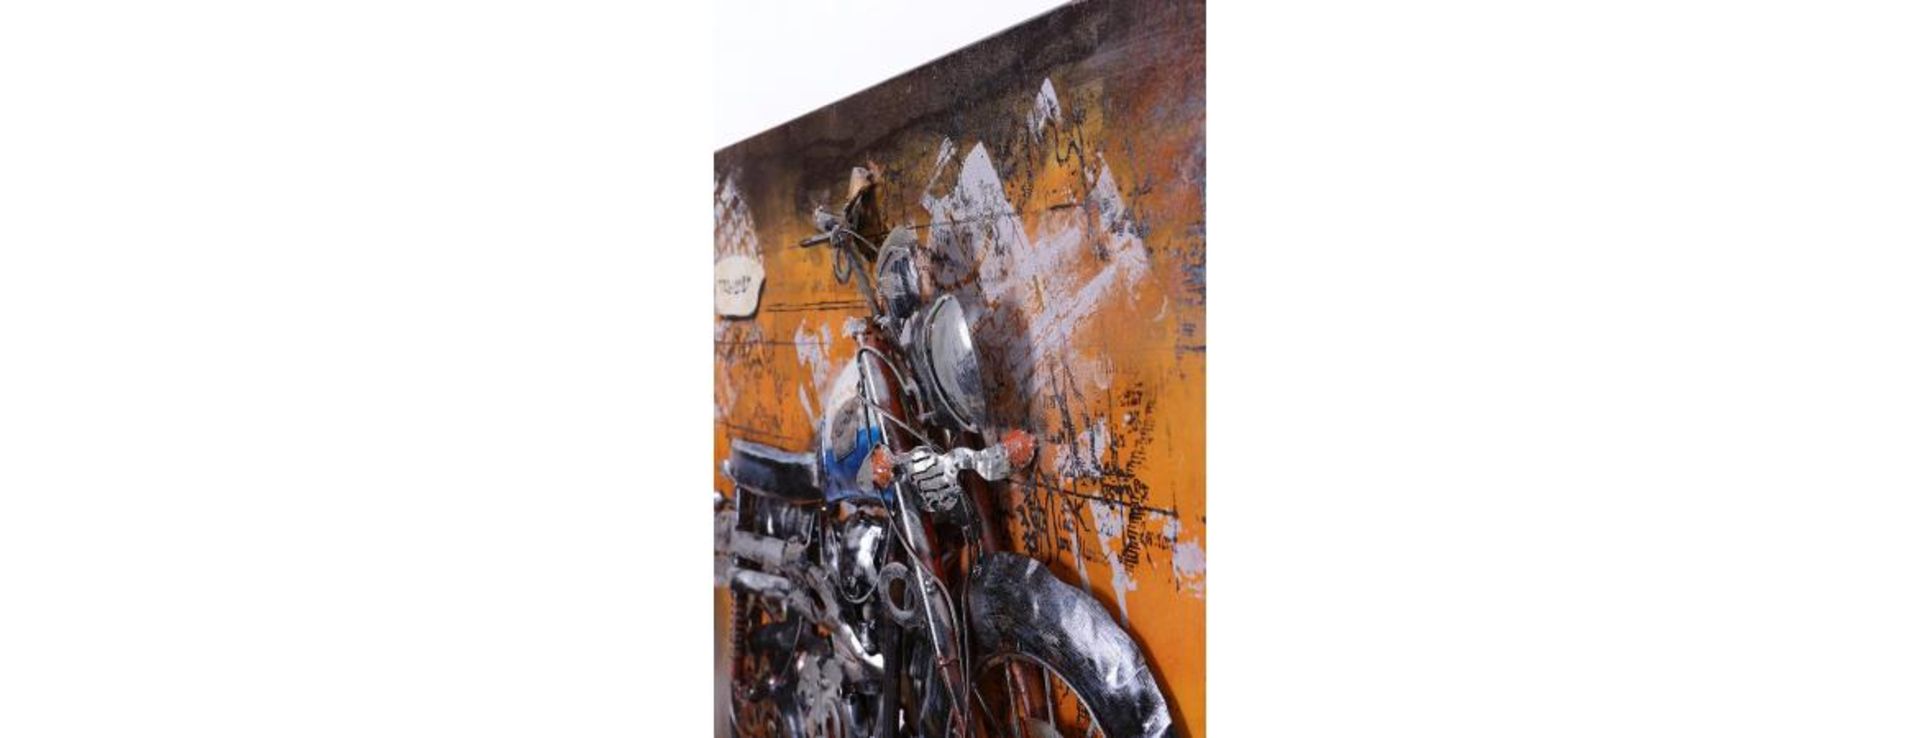 3D Metal Blue Triumph Motorbike Painting - Image 2 of 9